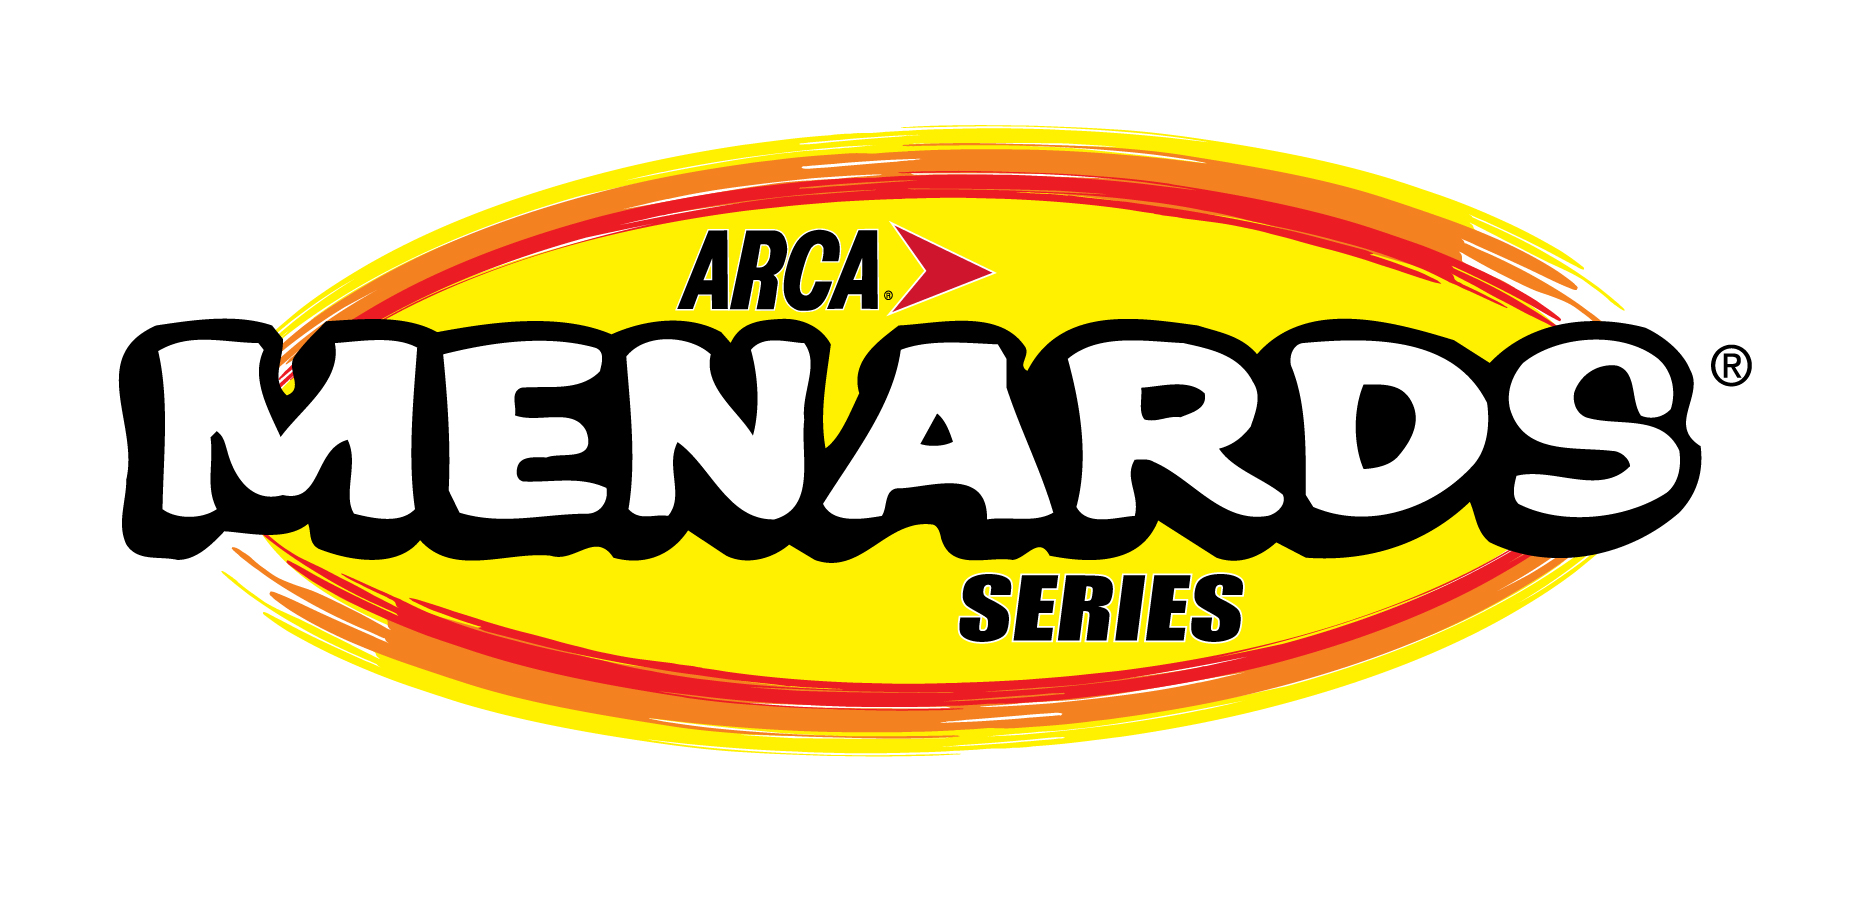 ARCA Menards Series Announces 2022 Broadcast Schedule